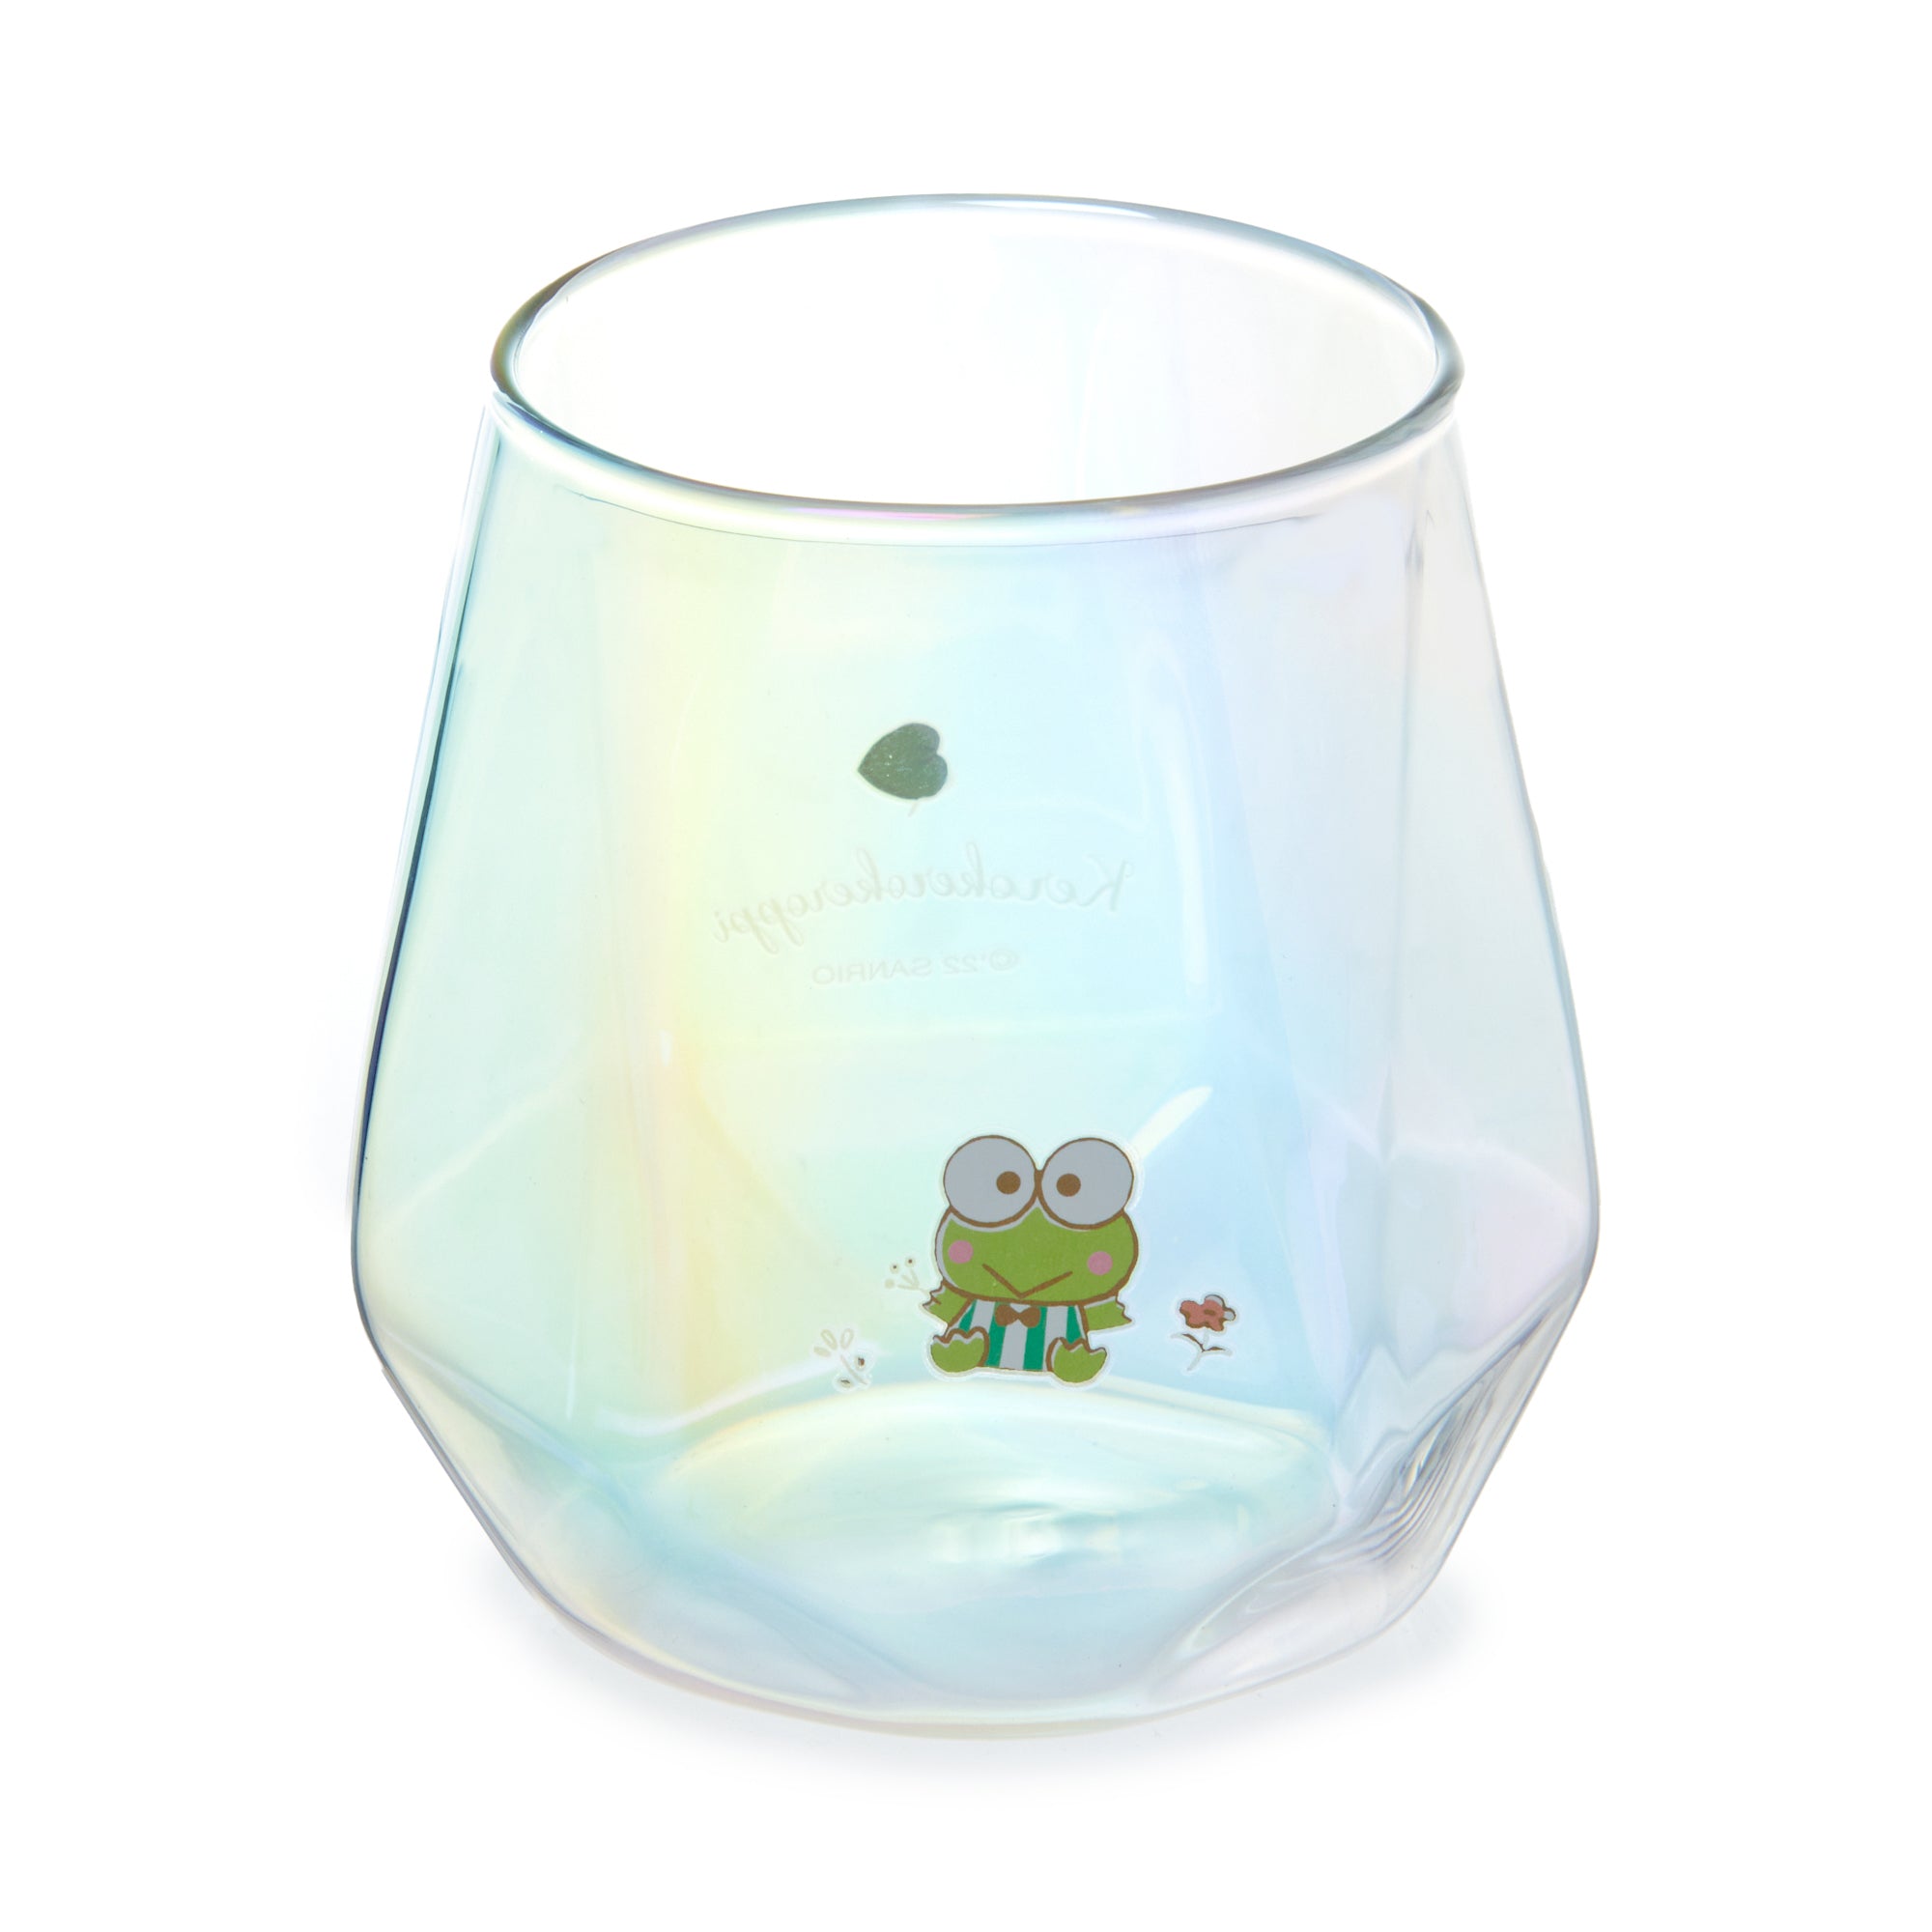 Keroppi Iridescent Glass Home Goods Global Original   